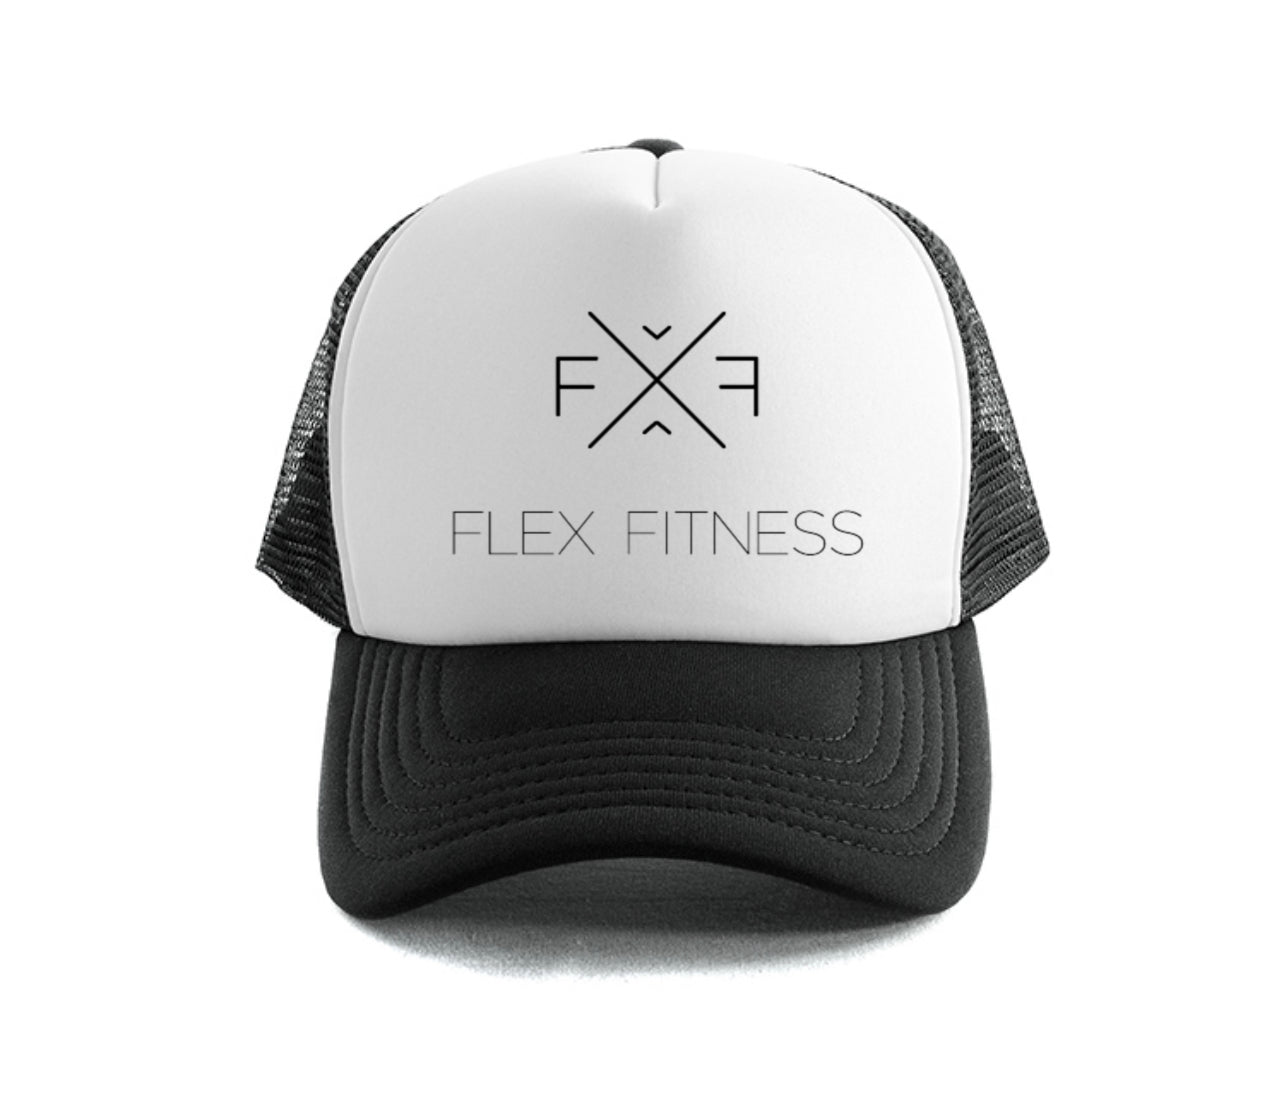 FLEX FITNESS TRUCKER HATS